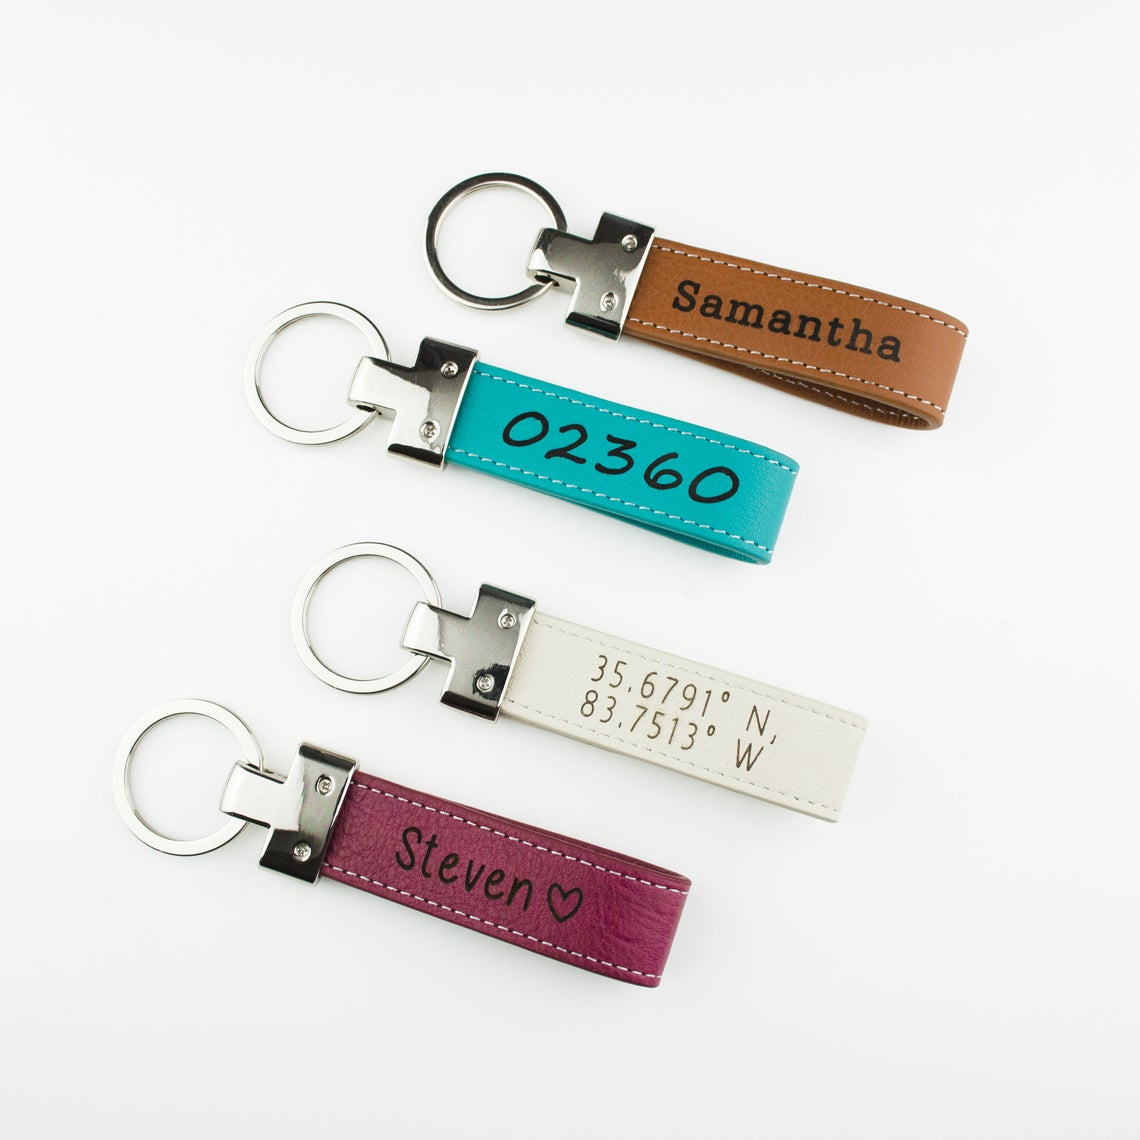 Dog Leather Keychain DIY Kit | Handmade Gifts for Dog Lovers Monogram